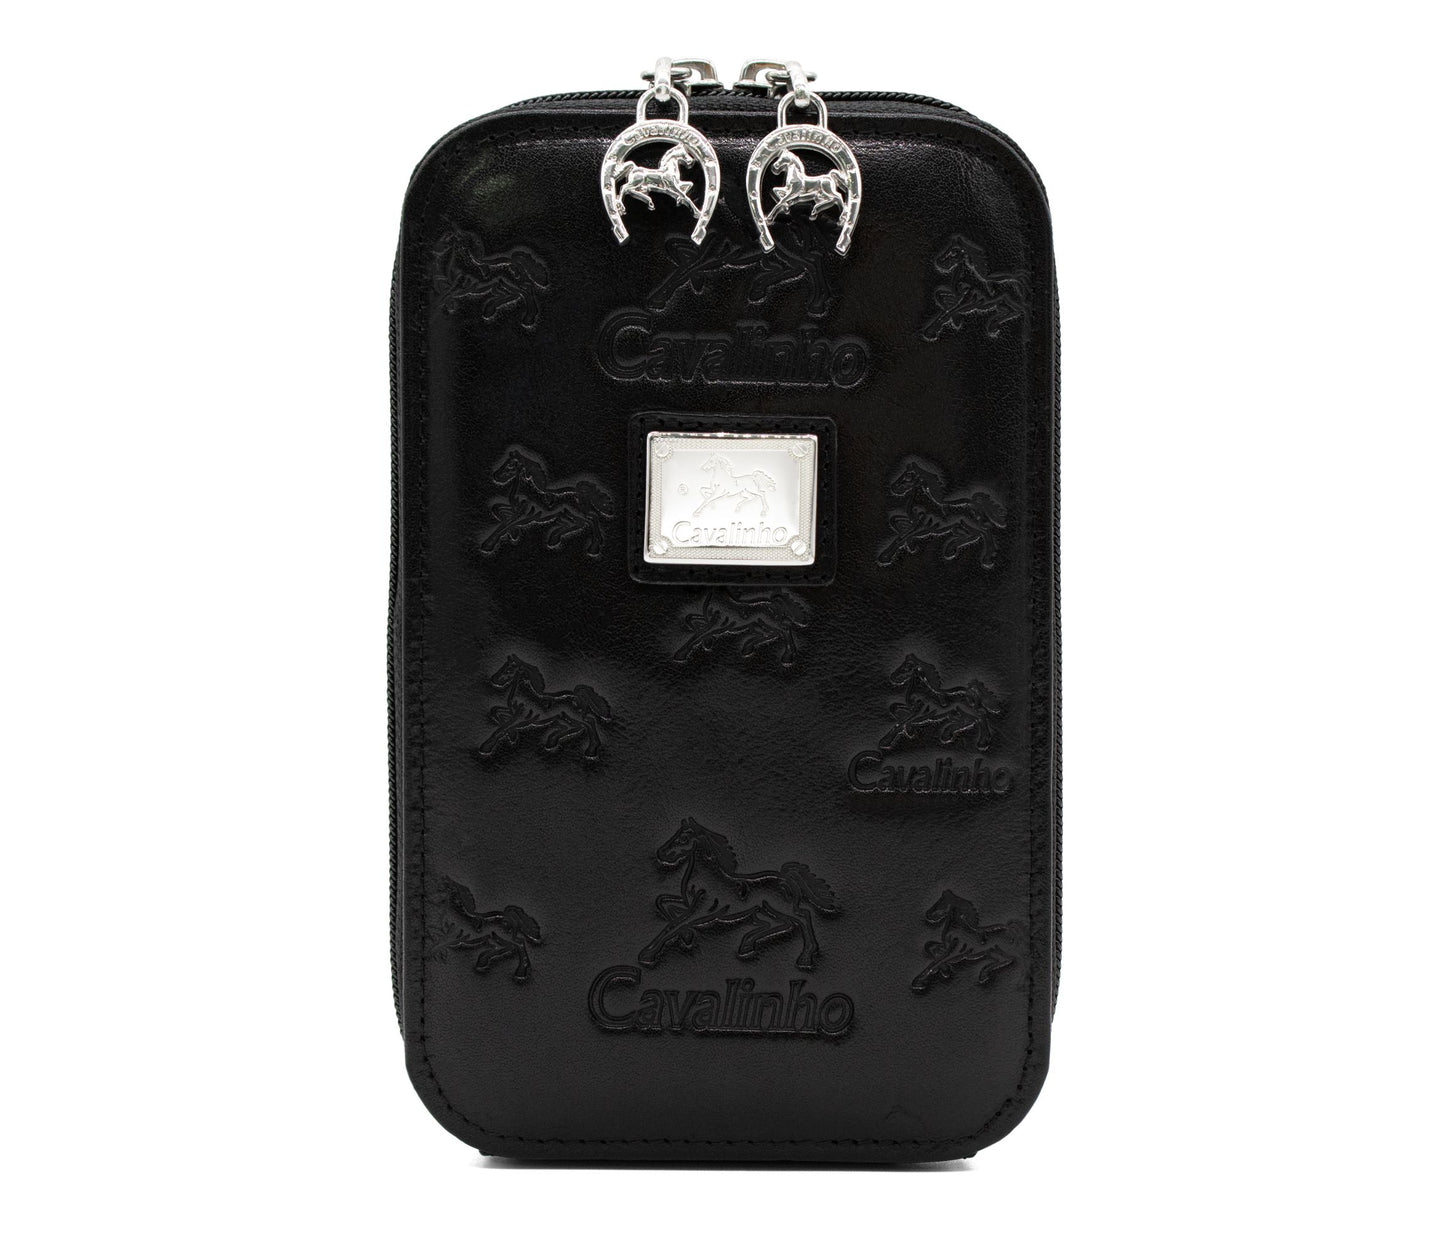 #color_ Black | Cavalinho Cavalo Lusitano Leather Phone Purse - Black - 28090278.01_1